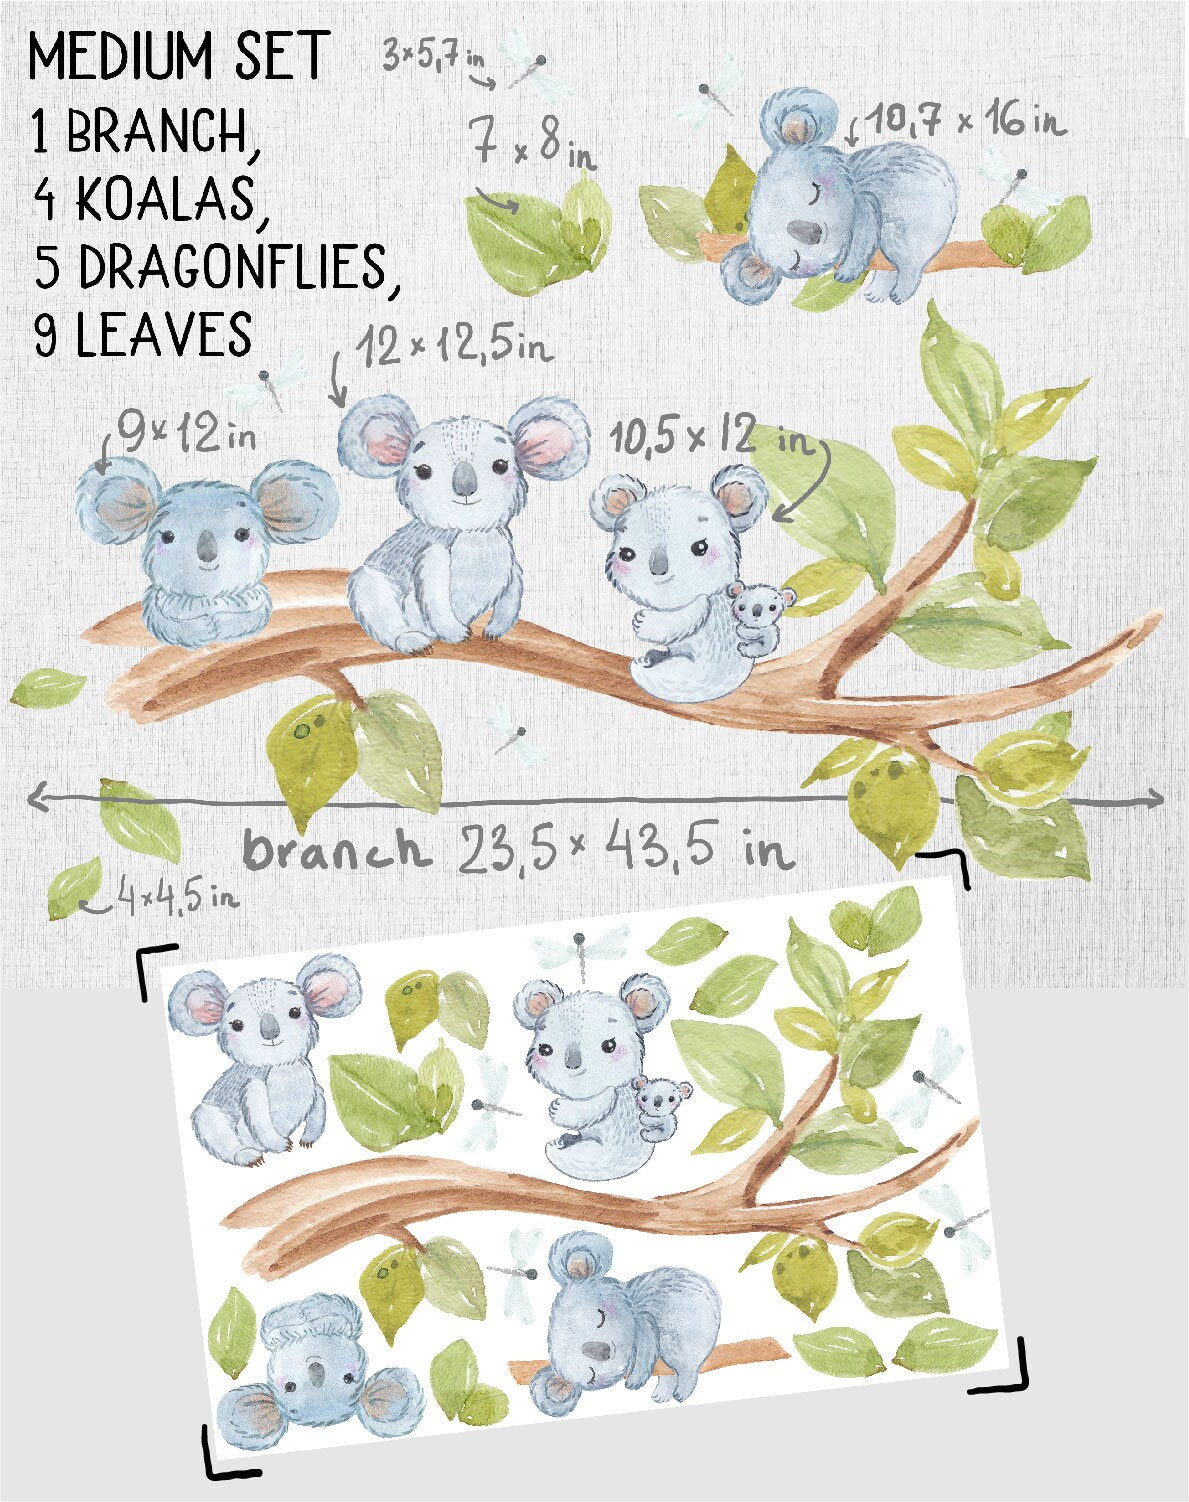 Koalas wall decals tree greenery leaves stickers Australian animals, LF197